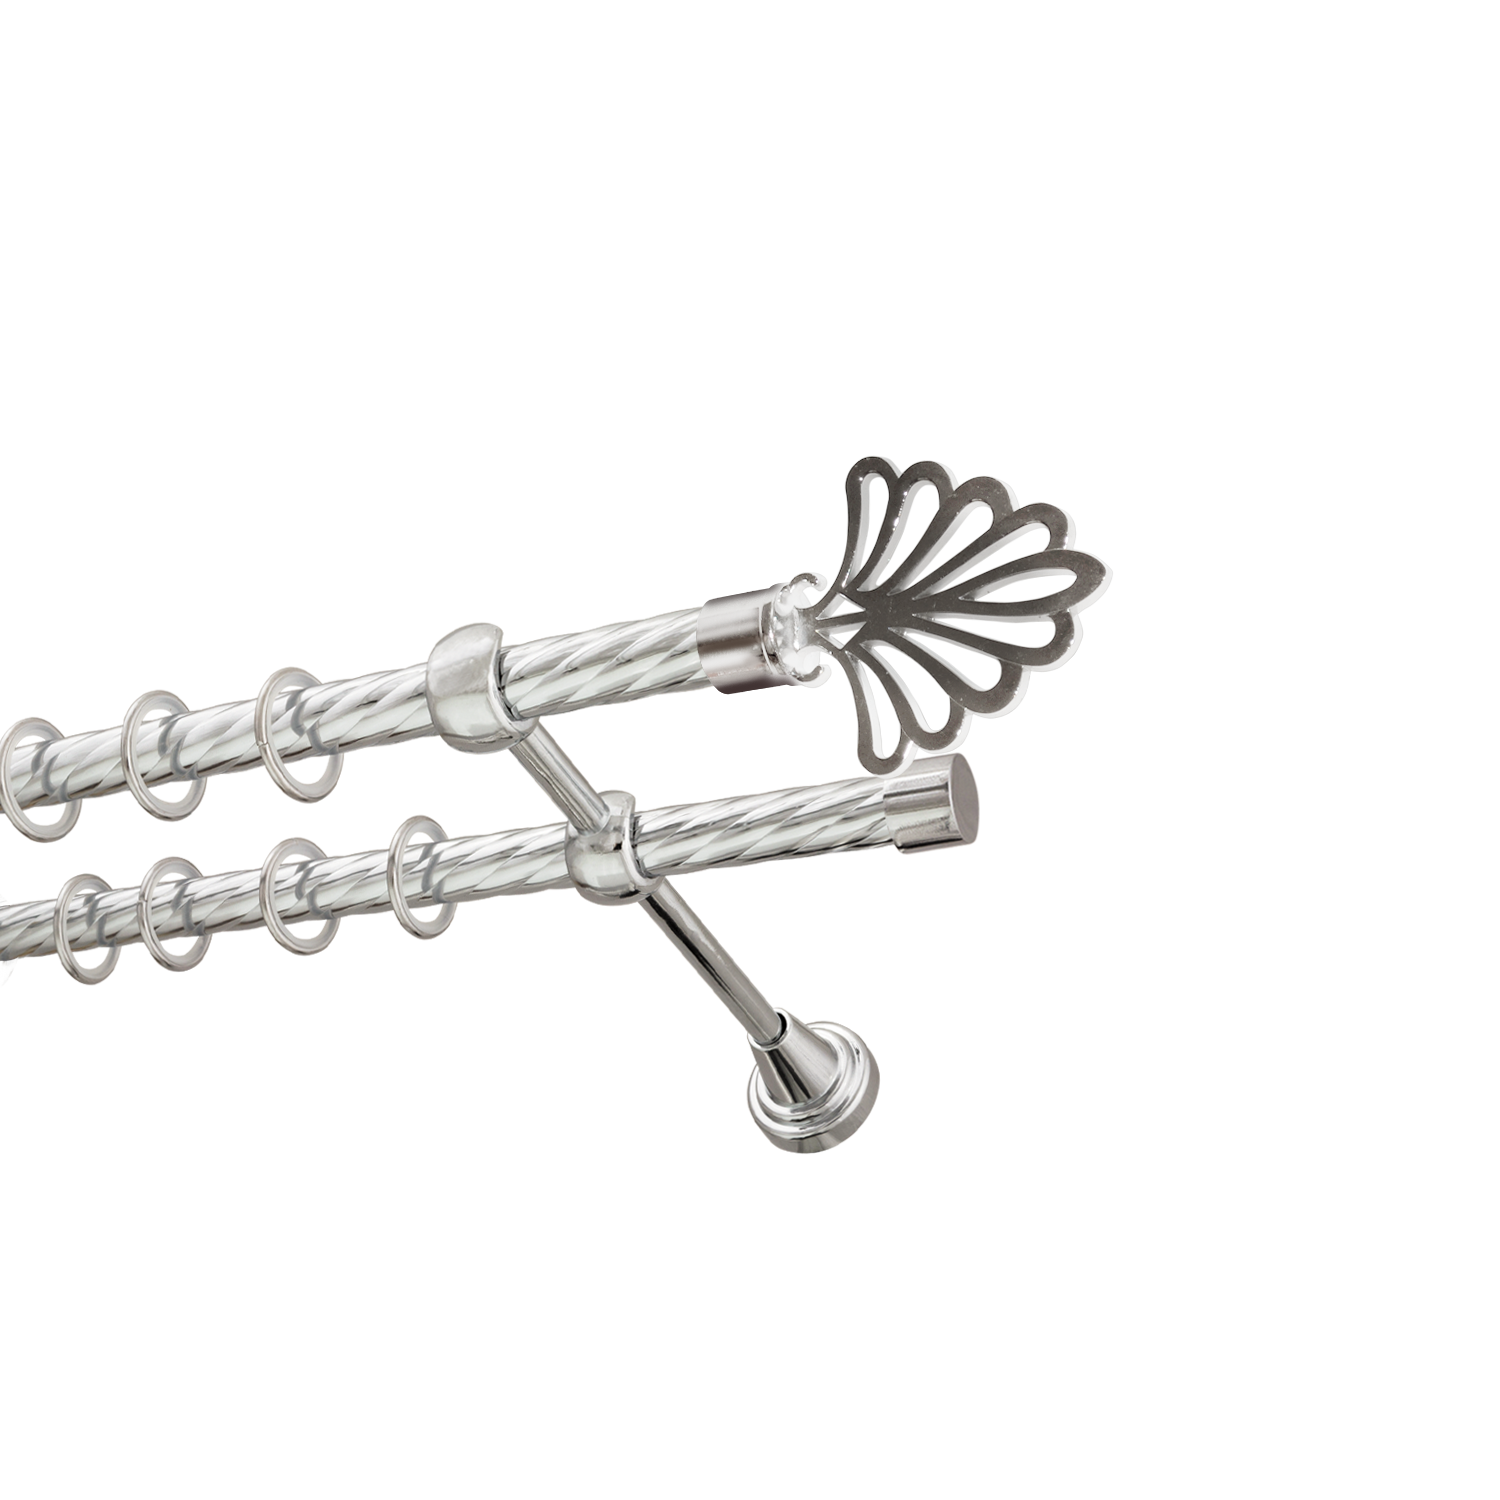 Металлический карниз для штор Бутик, двухрядный 16/16 мм, серебро, витая штанга, длина 200 см - фото Wikidecor.ru